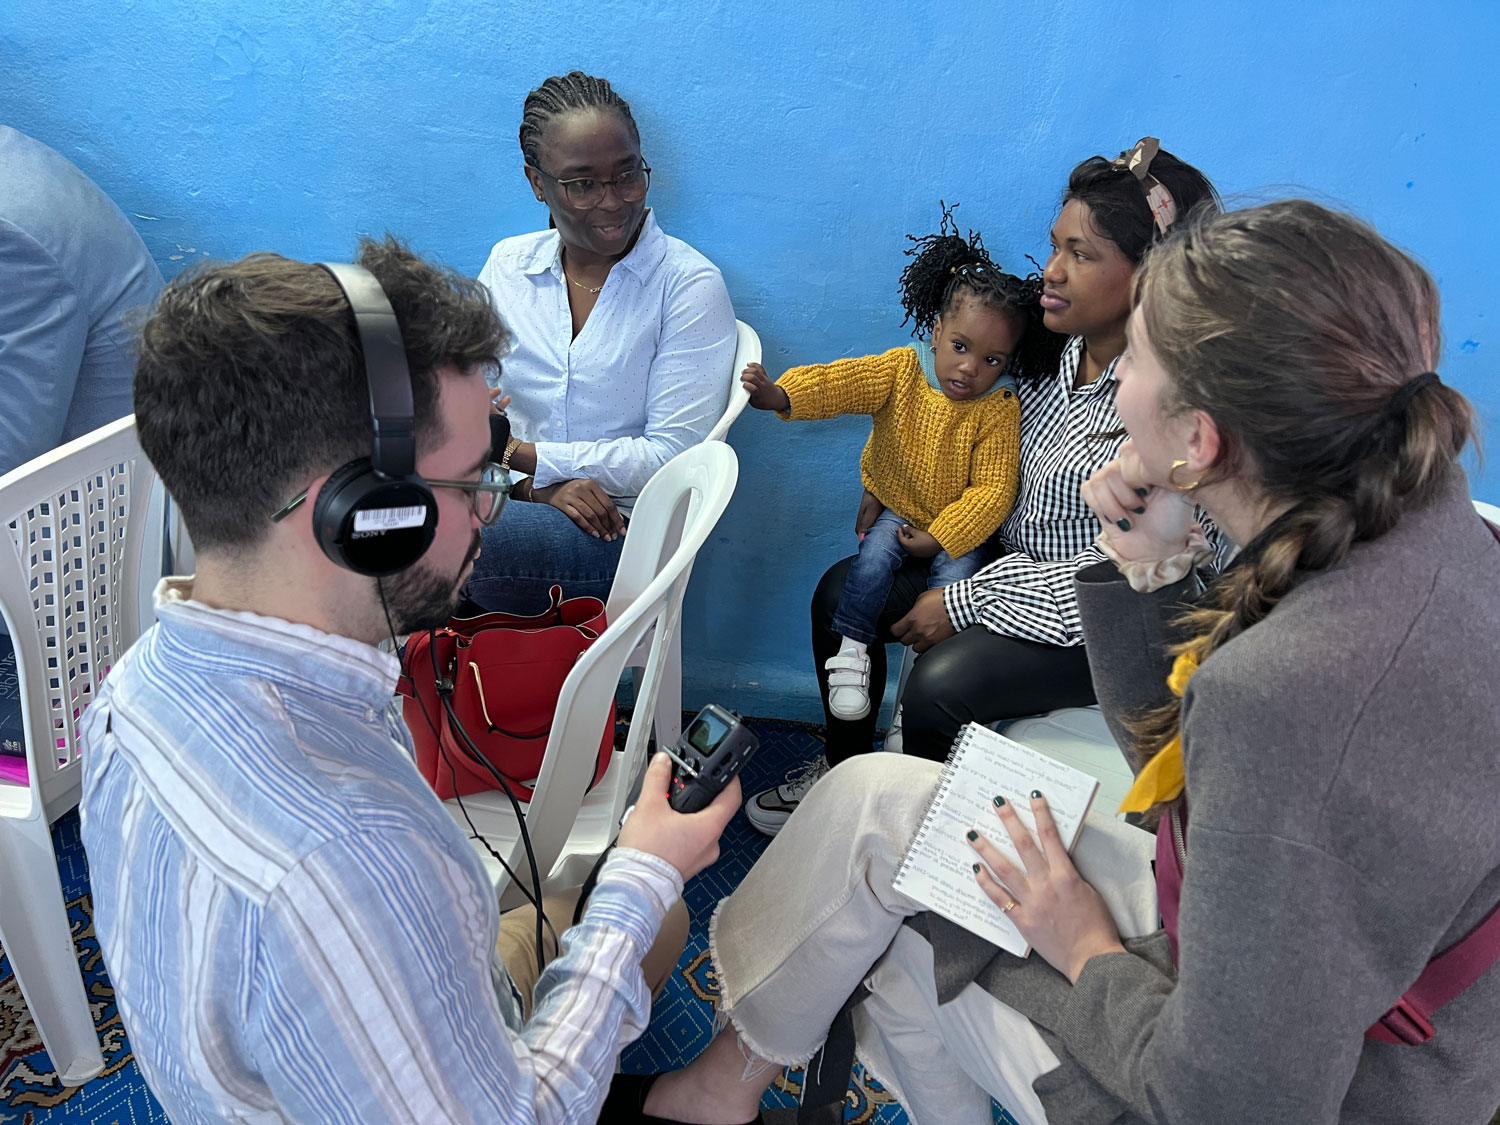 Students Amanda Taheri and Eric Raimondi interview members of a Christian "House Church" in Rabat